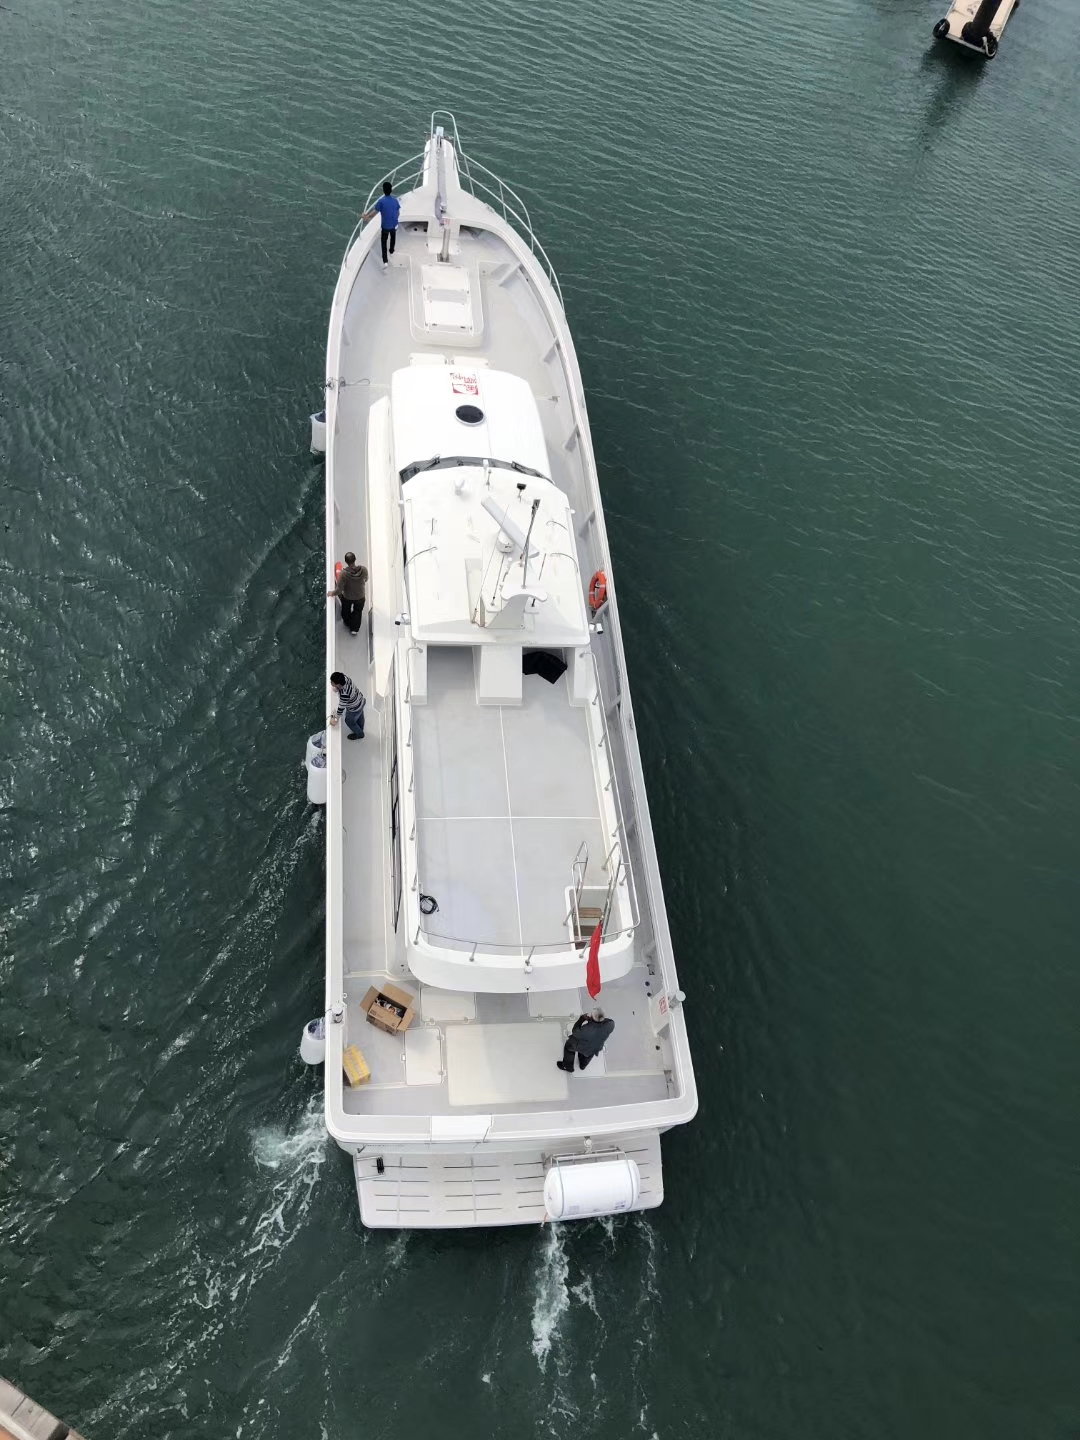 Grandsea 77ft Fiberglass Deep Sea Fishing Boat for Sale